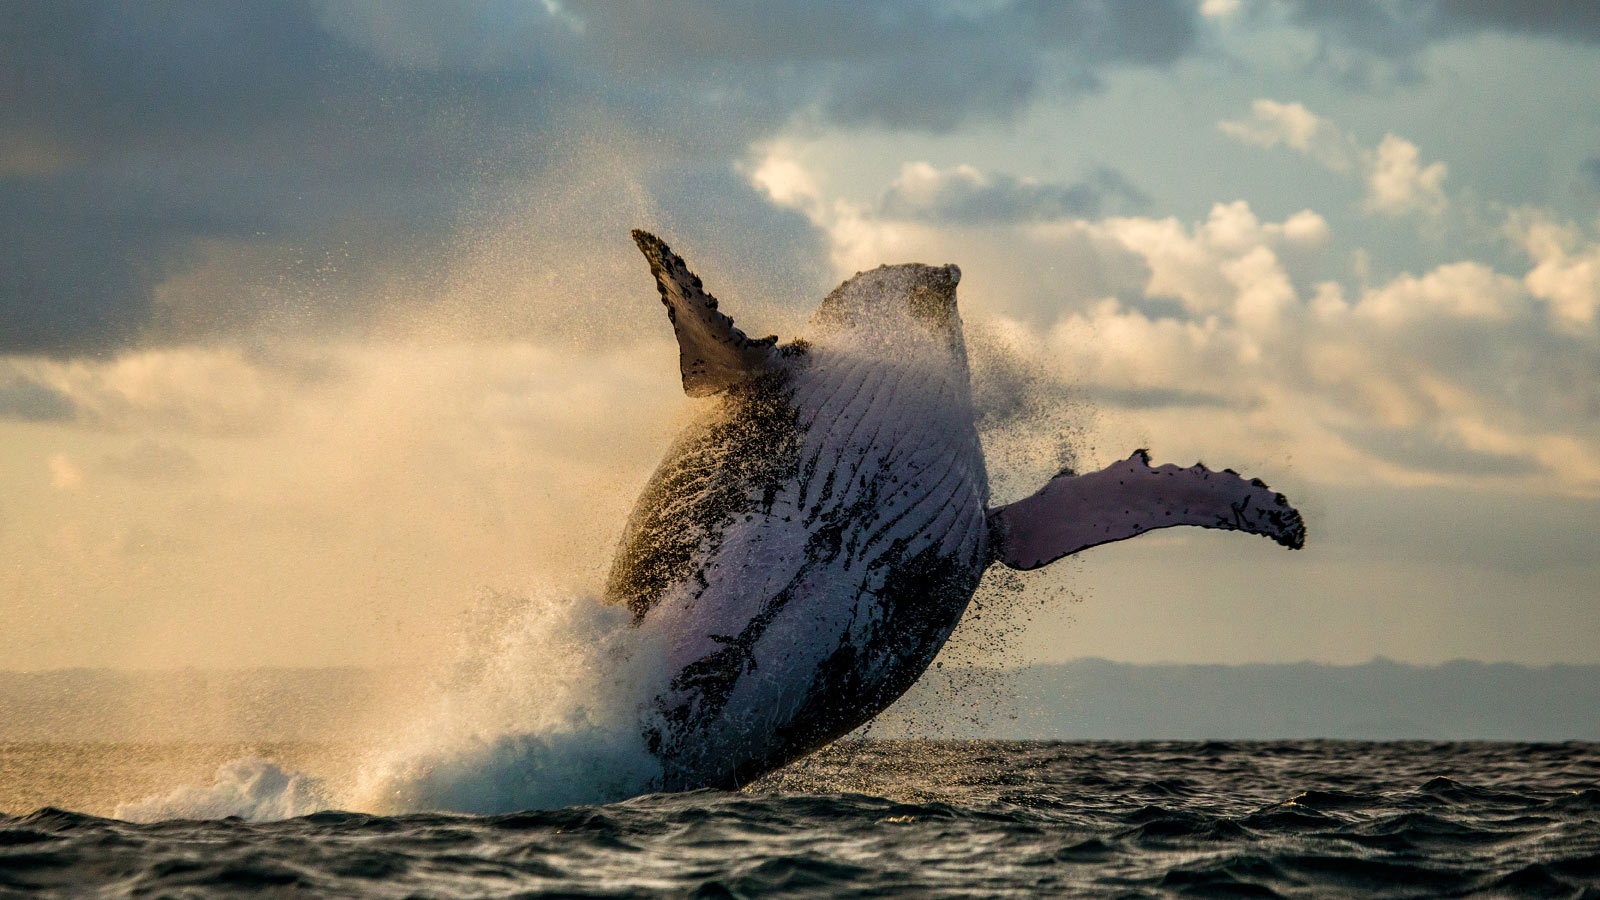 Whale breaching at sea